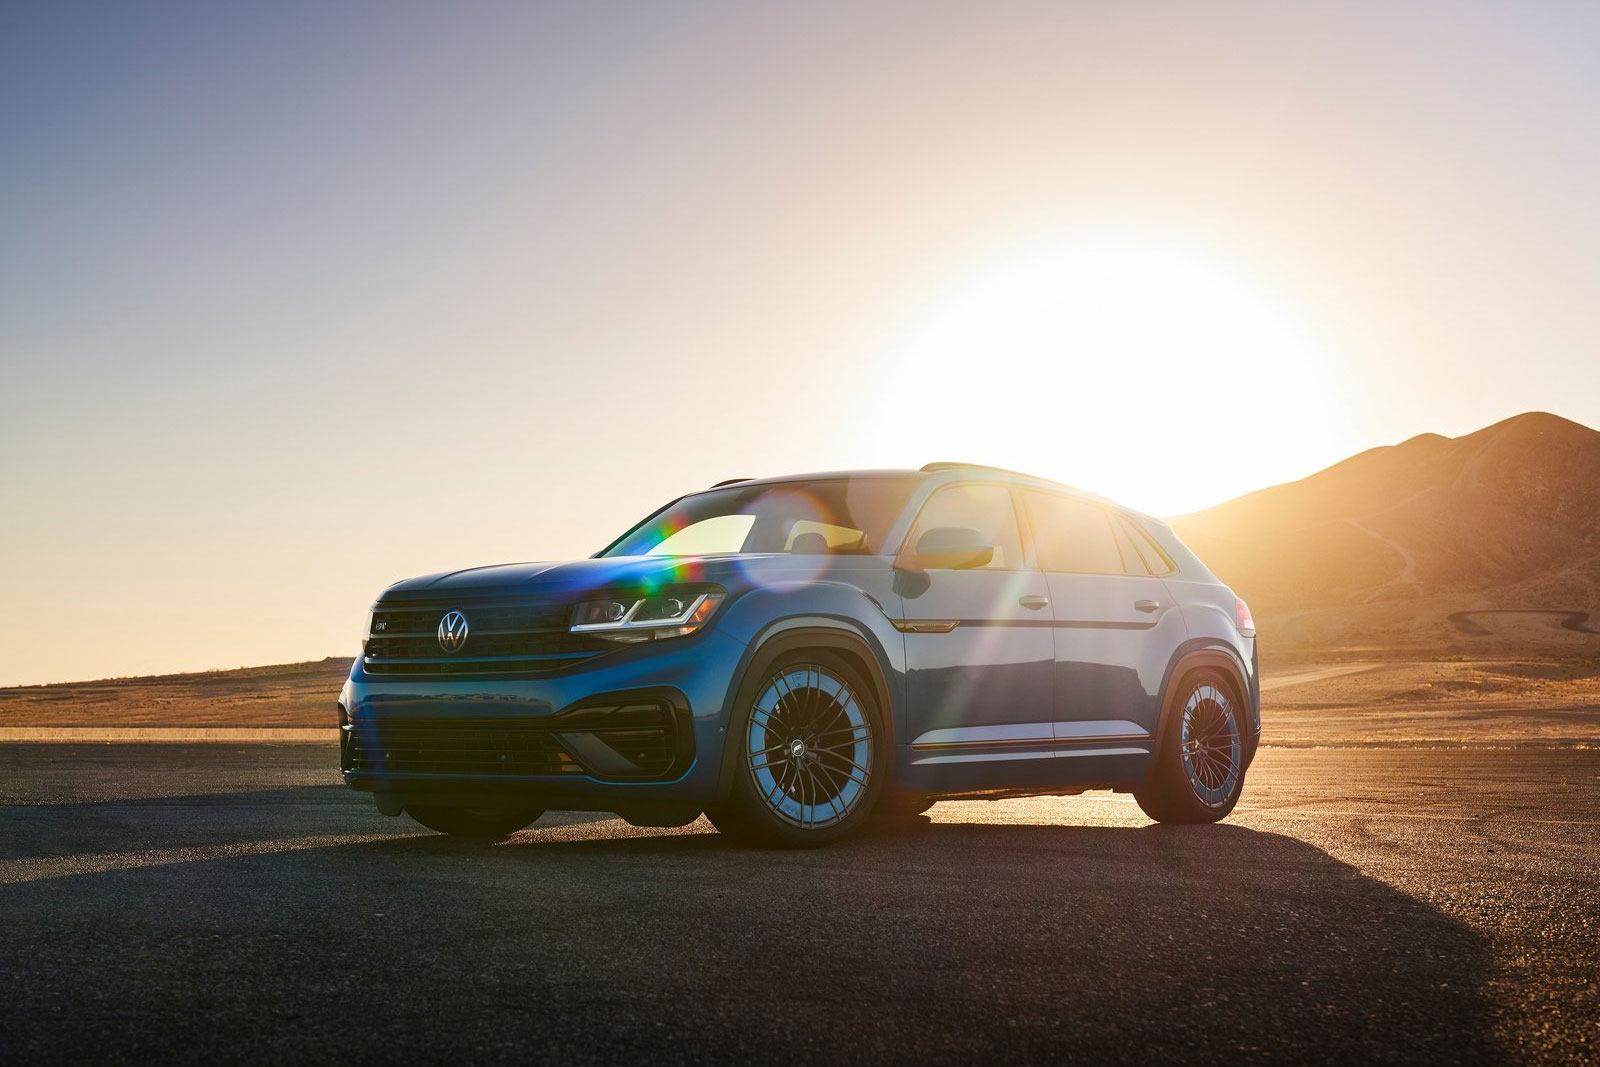 Bilder: VW Atlas Cross Sport GT Concept